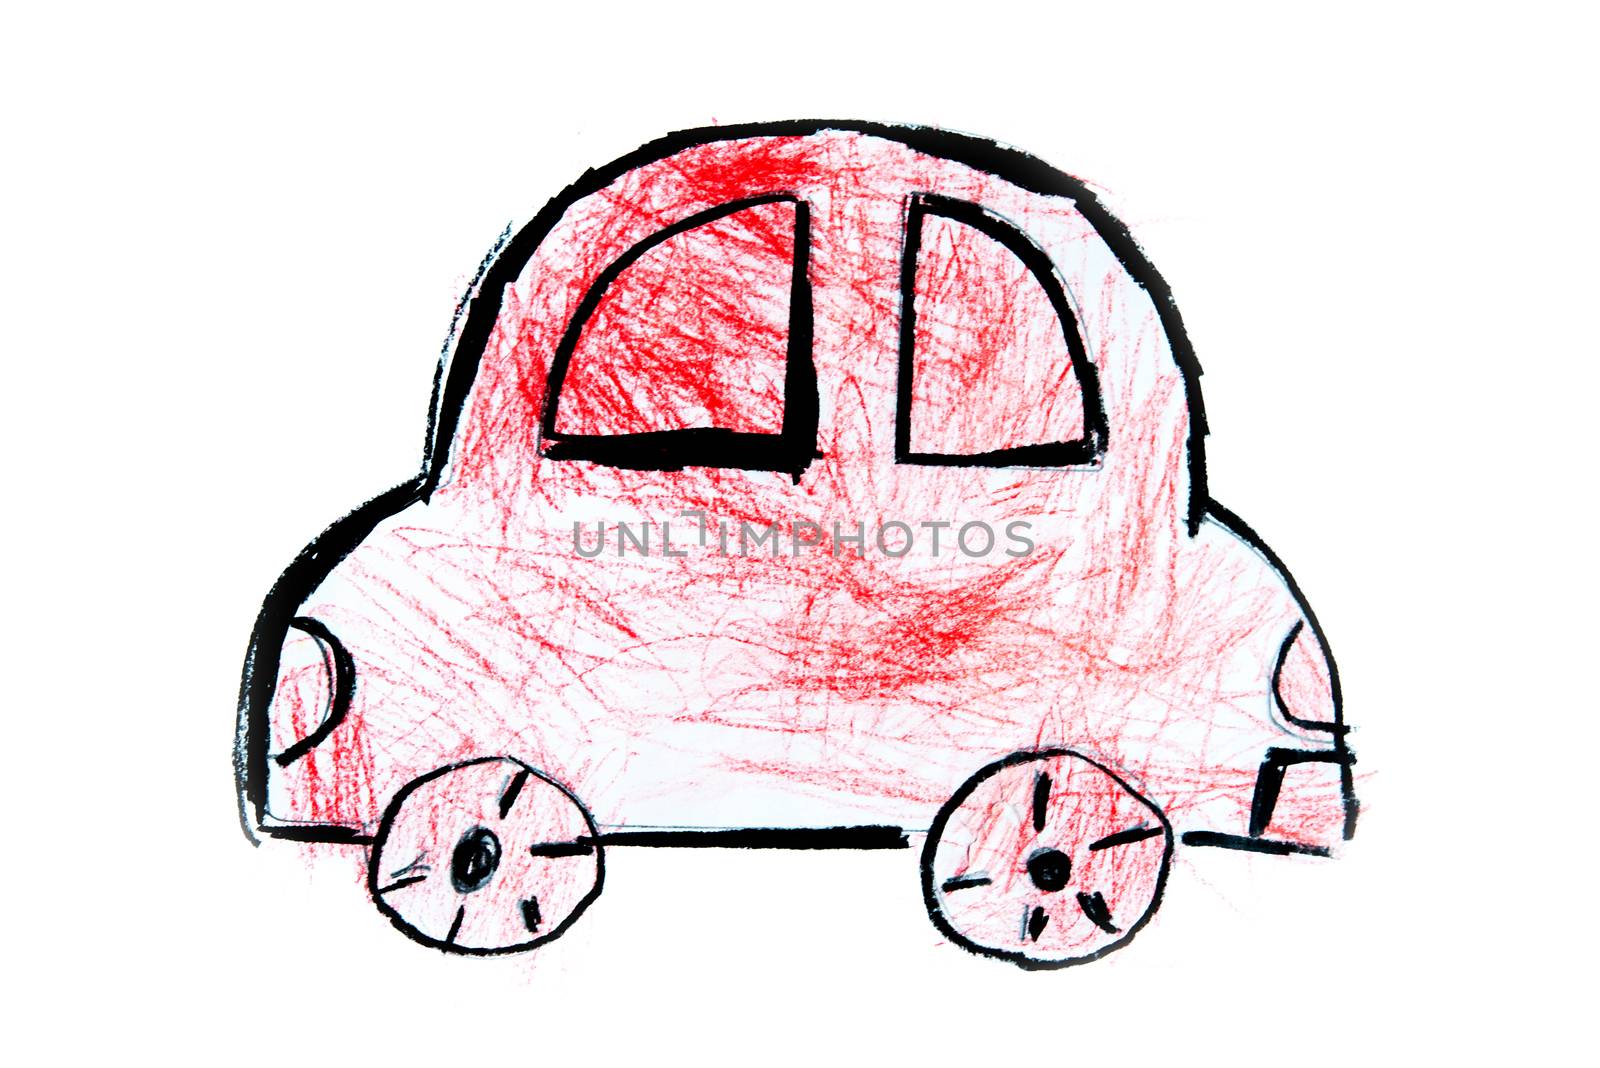 Child artwork, hand drawing car on plain background.